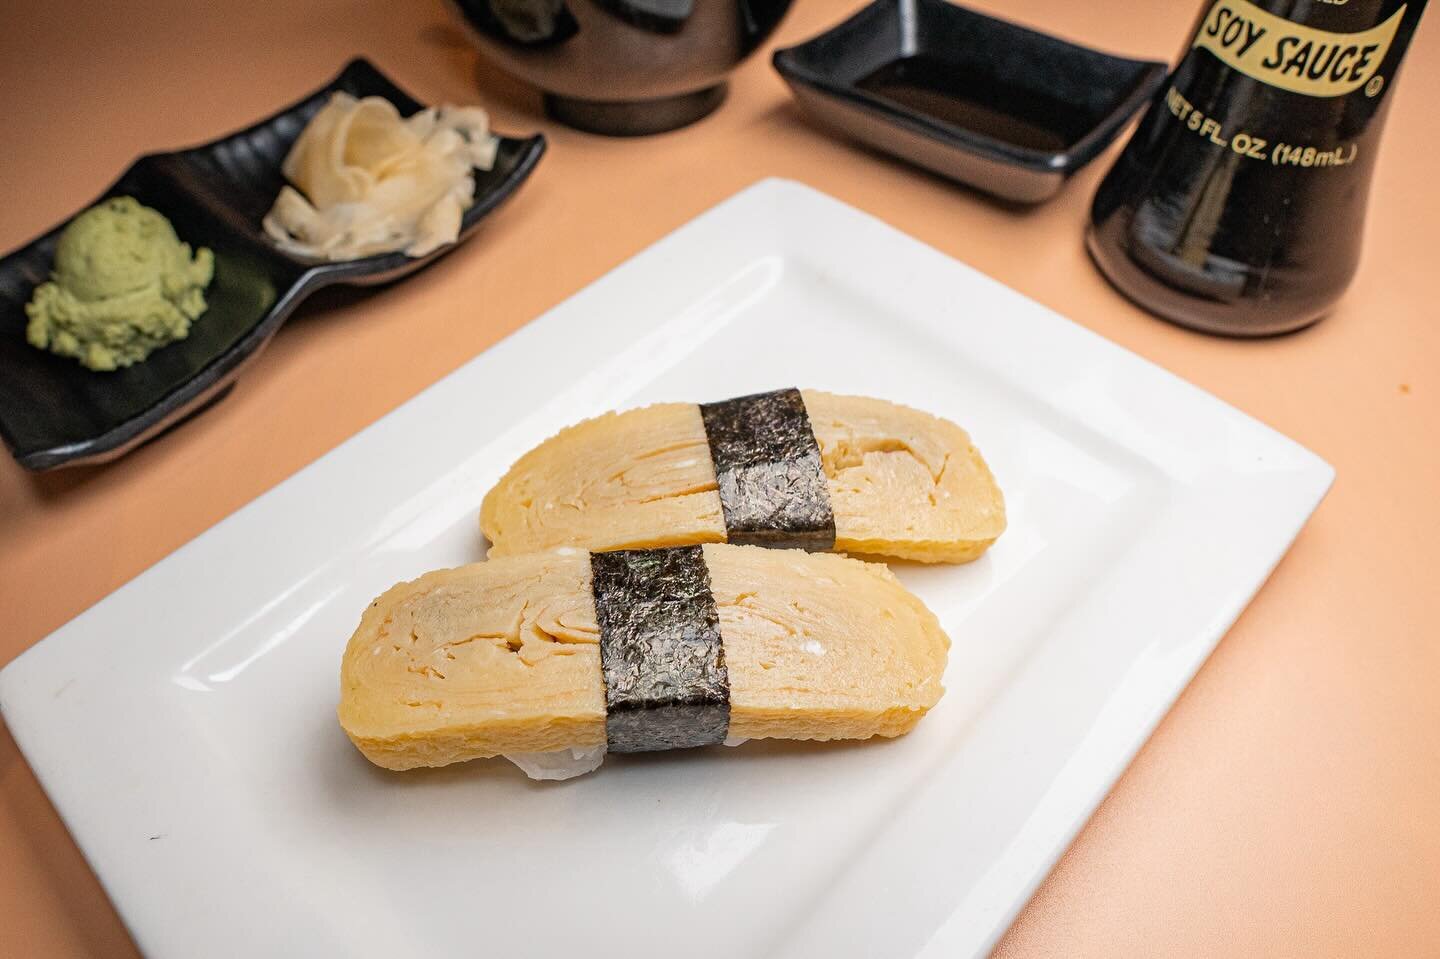 A bite-sized taste of perfection: our nigiri is sure to delight even the most discerning palates! Visit us today! #VegasEats 🍣👌

 ◾◽◾◽◾◽◾◽◾◽
🍣 𝗔𝗬𝗖𝗘 𝗦𝗨𝗦𝗛𝗜 𝗠𝗢𝗡 𝗠𝗔𝗥𝗬𝗟𝗔𝗡𝗗
⏰ ᴅᴀɪʟʏ: 12:00 ᴘᴍ - 11:00 ᴘᴍ
⏰ ʟᴀꜱᴛ ꜱᴇᴀᴛɪɴɢ ꜰᴏʀ ᴀʏᴄᴇ 10ᴘᴍ
⏰ 